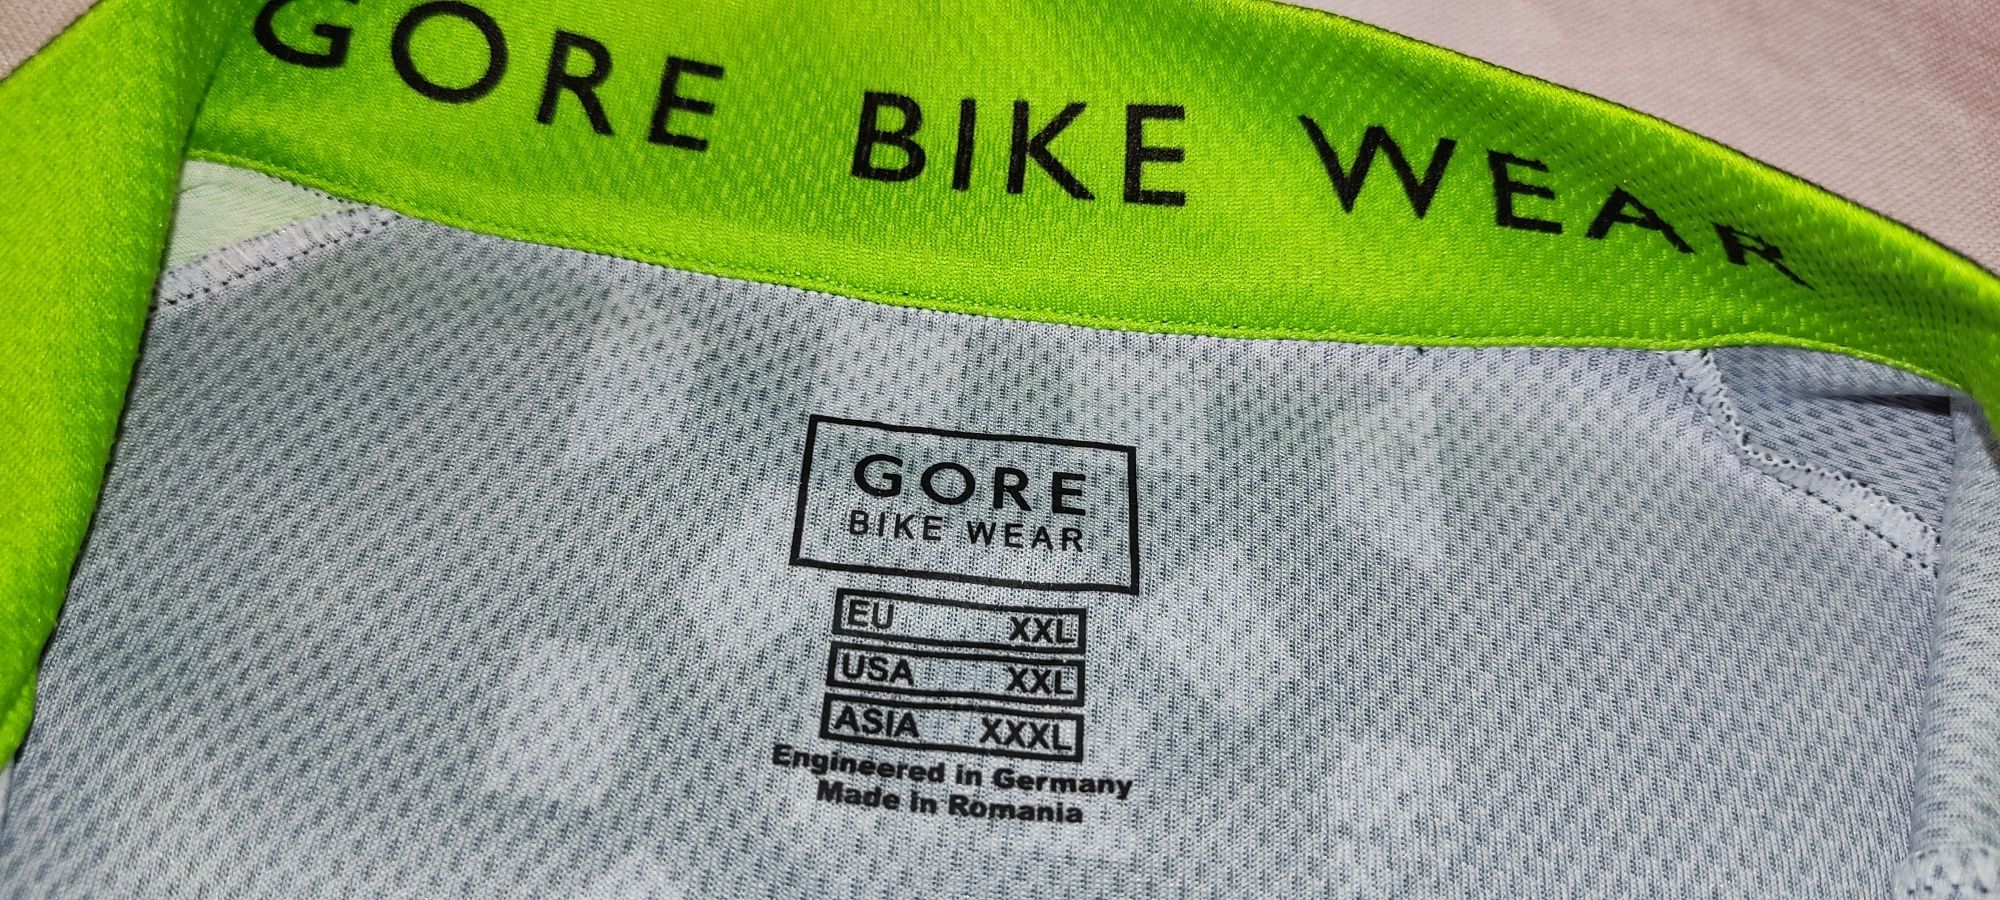 Tricou Gore Bike Wear Spaths tehnic mtb ciclism gravel XXL bărbat